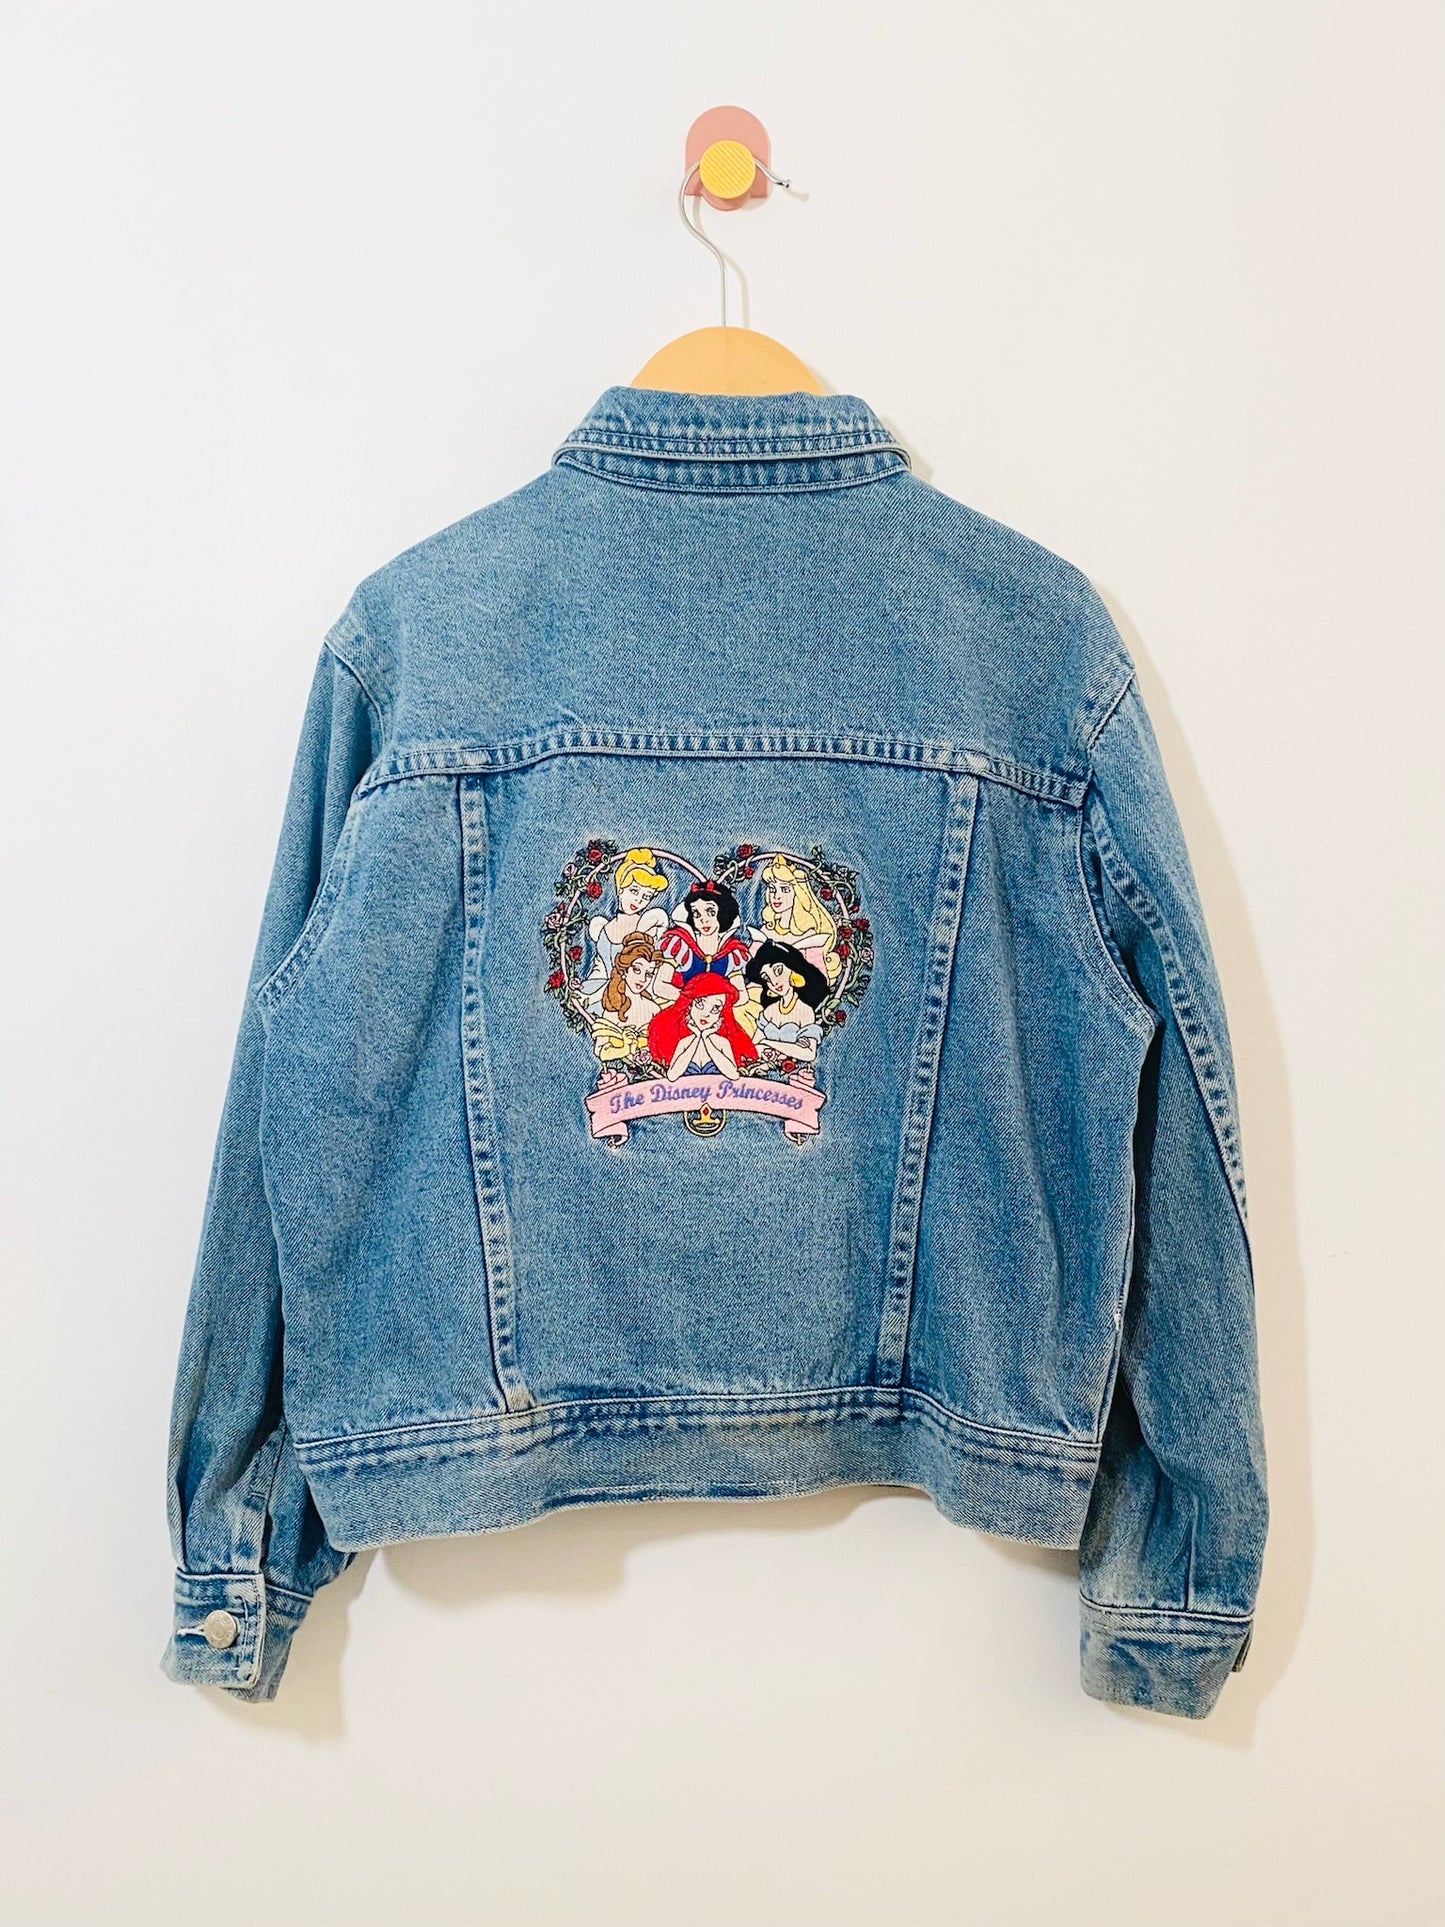 vintage disney princesses denim jacket  / 10-12y